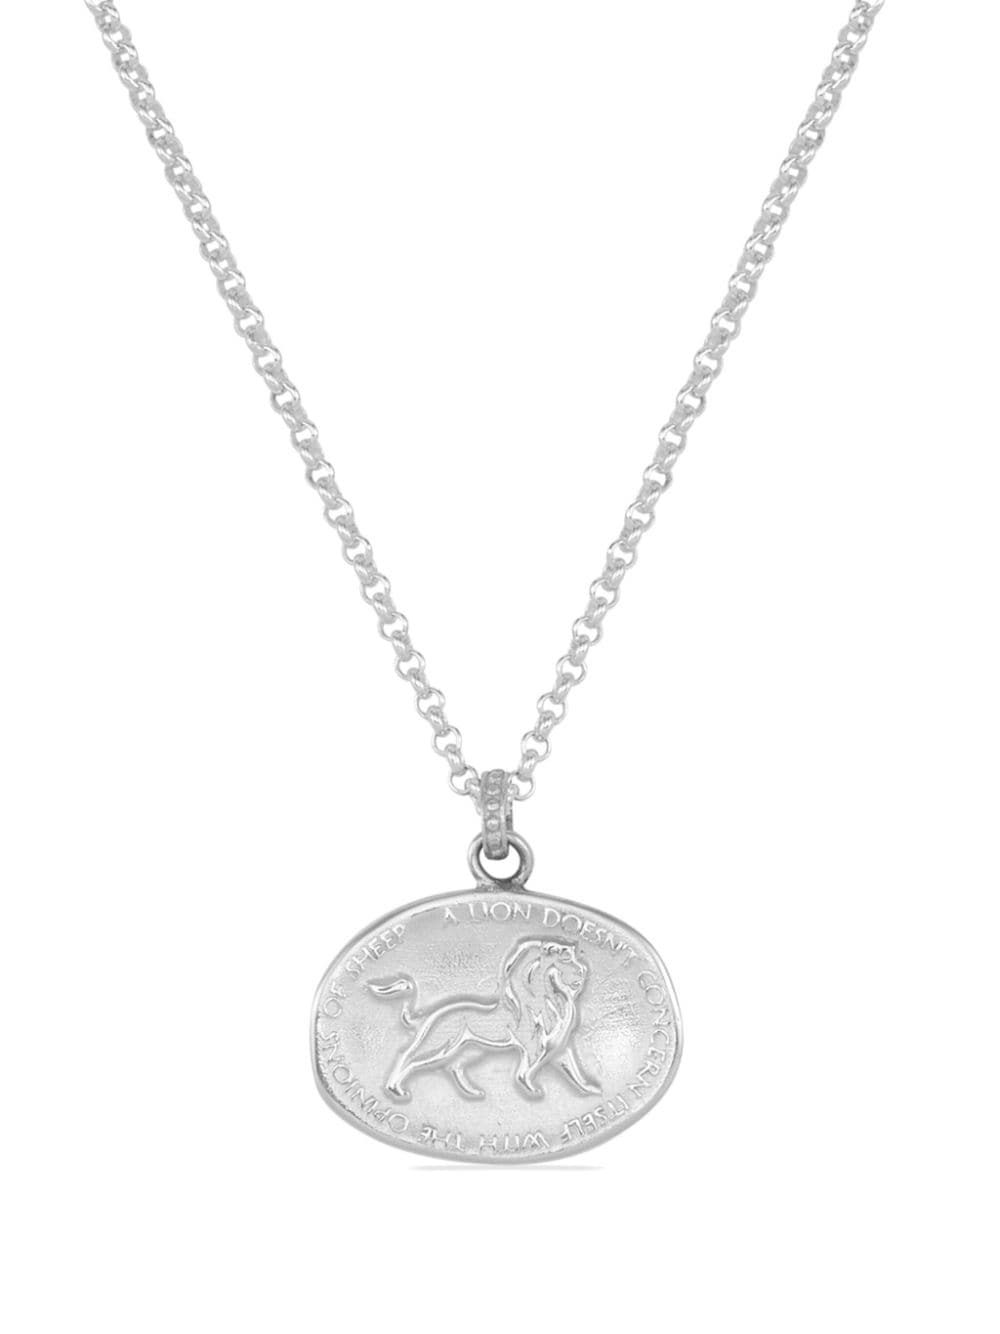 Inspiring Lion talisman necklace